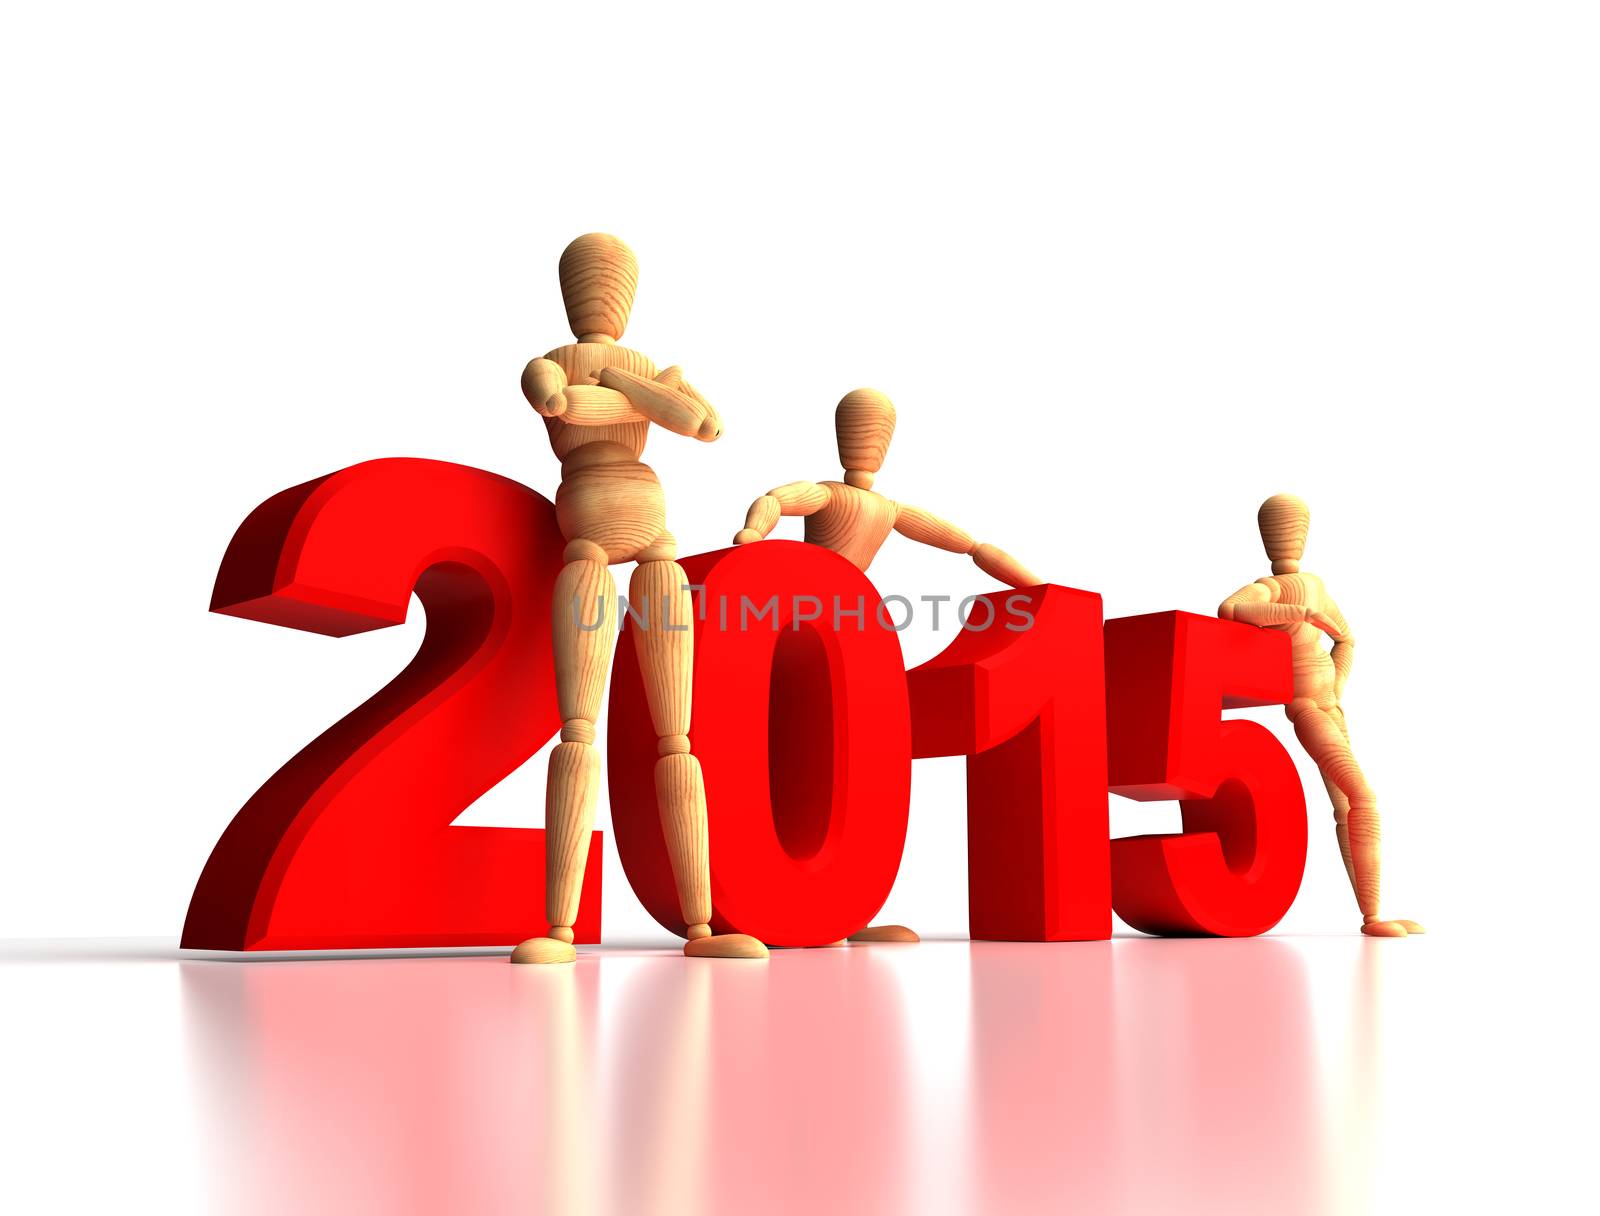 2015 New Years Team by selensergen